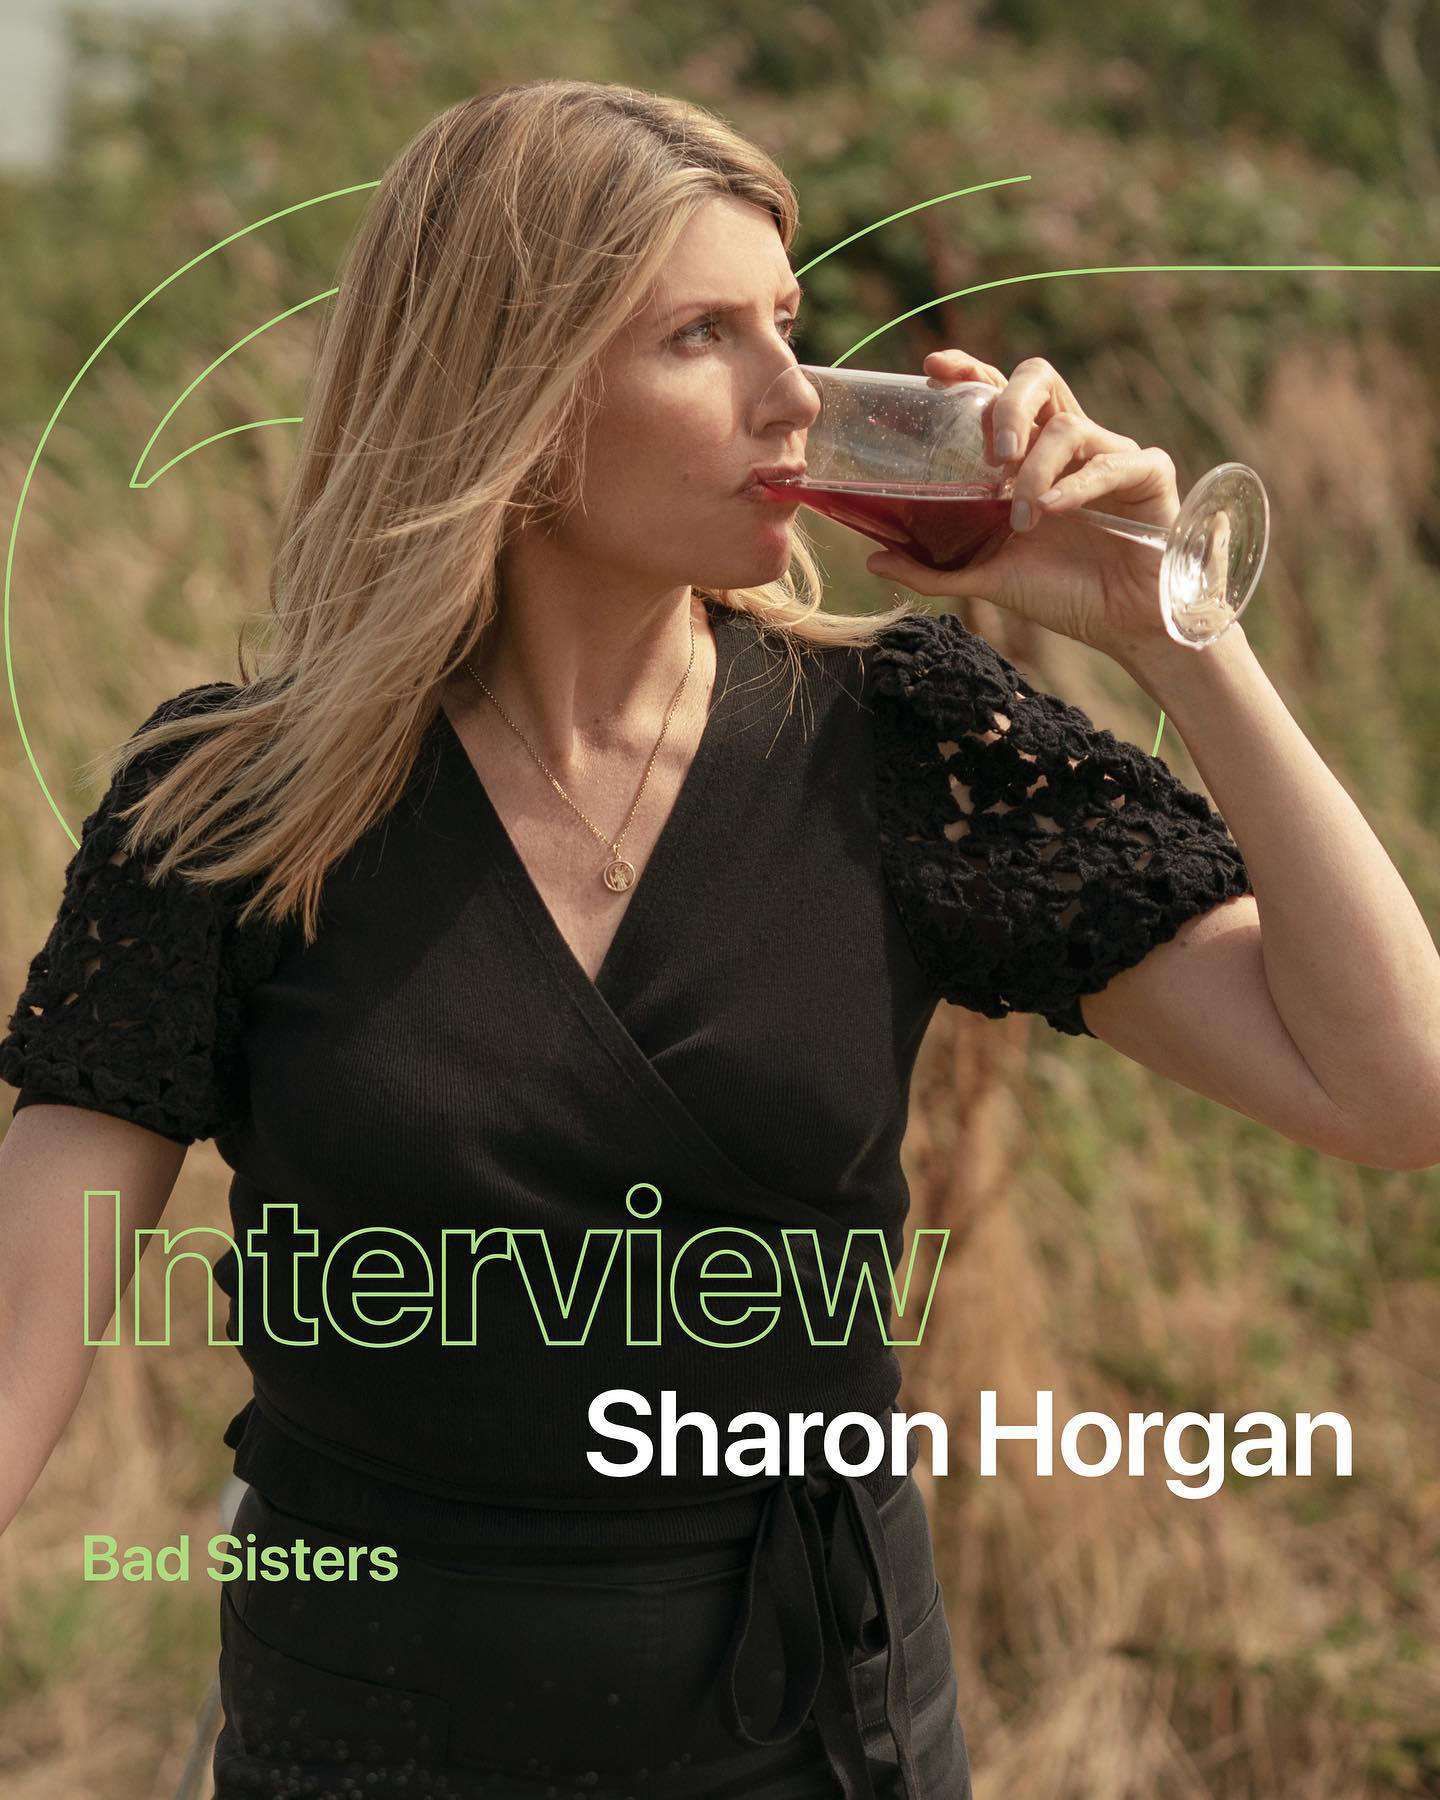 Apple TV+ - Meet Executive Producer #sharonhorgan, who also plays Eva Garvey, one of the #BadSisters